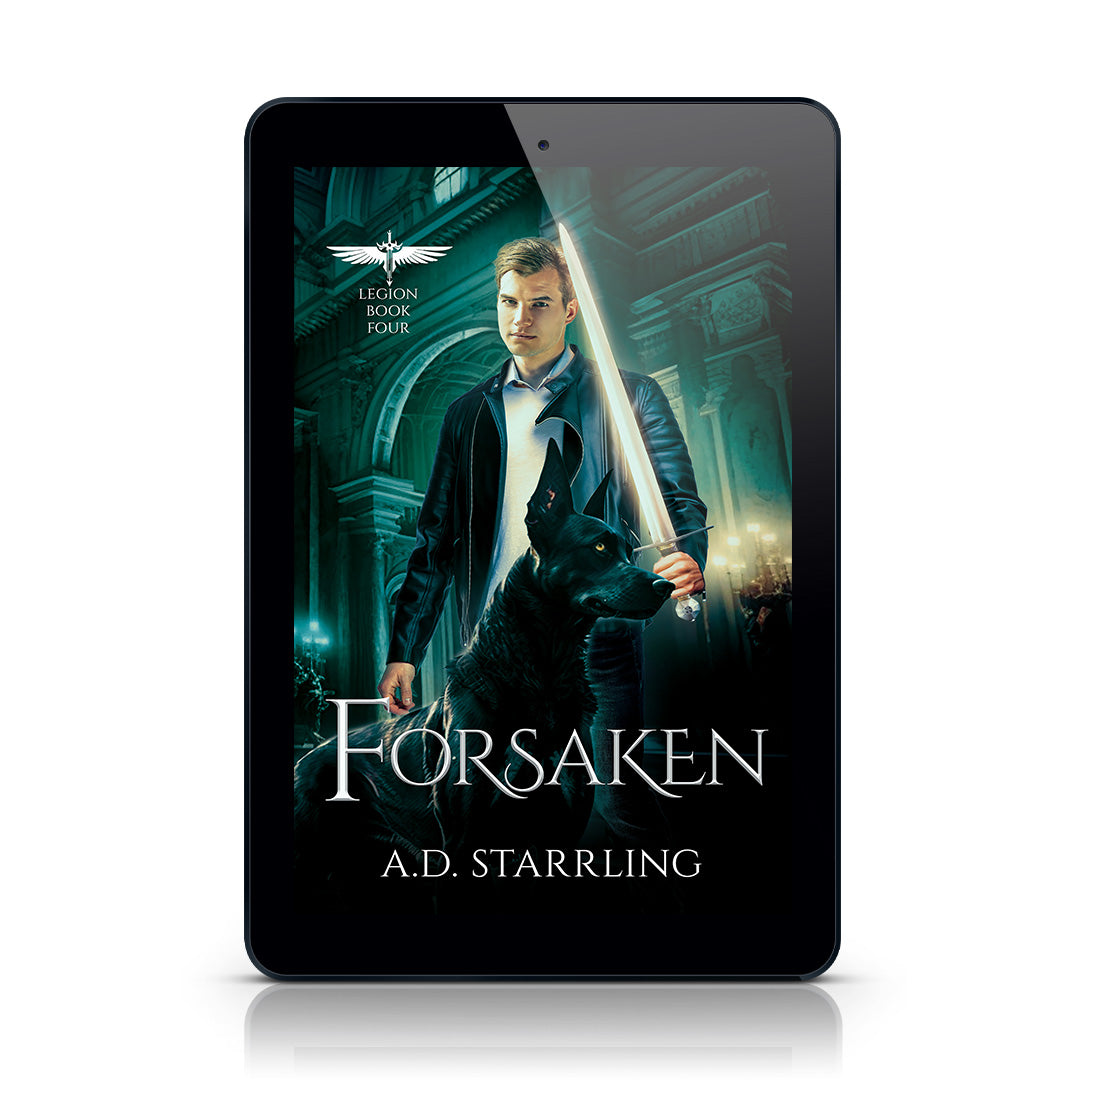 Forsaken (Legion Book 4) EBOOK urban fantasy action adventure author ad starrling